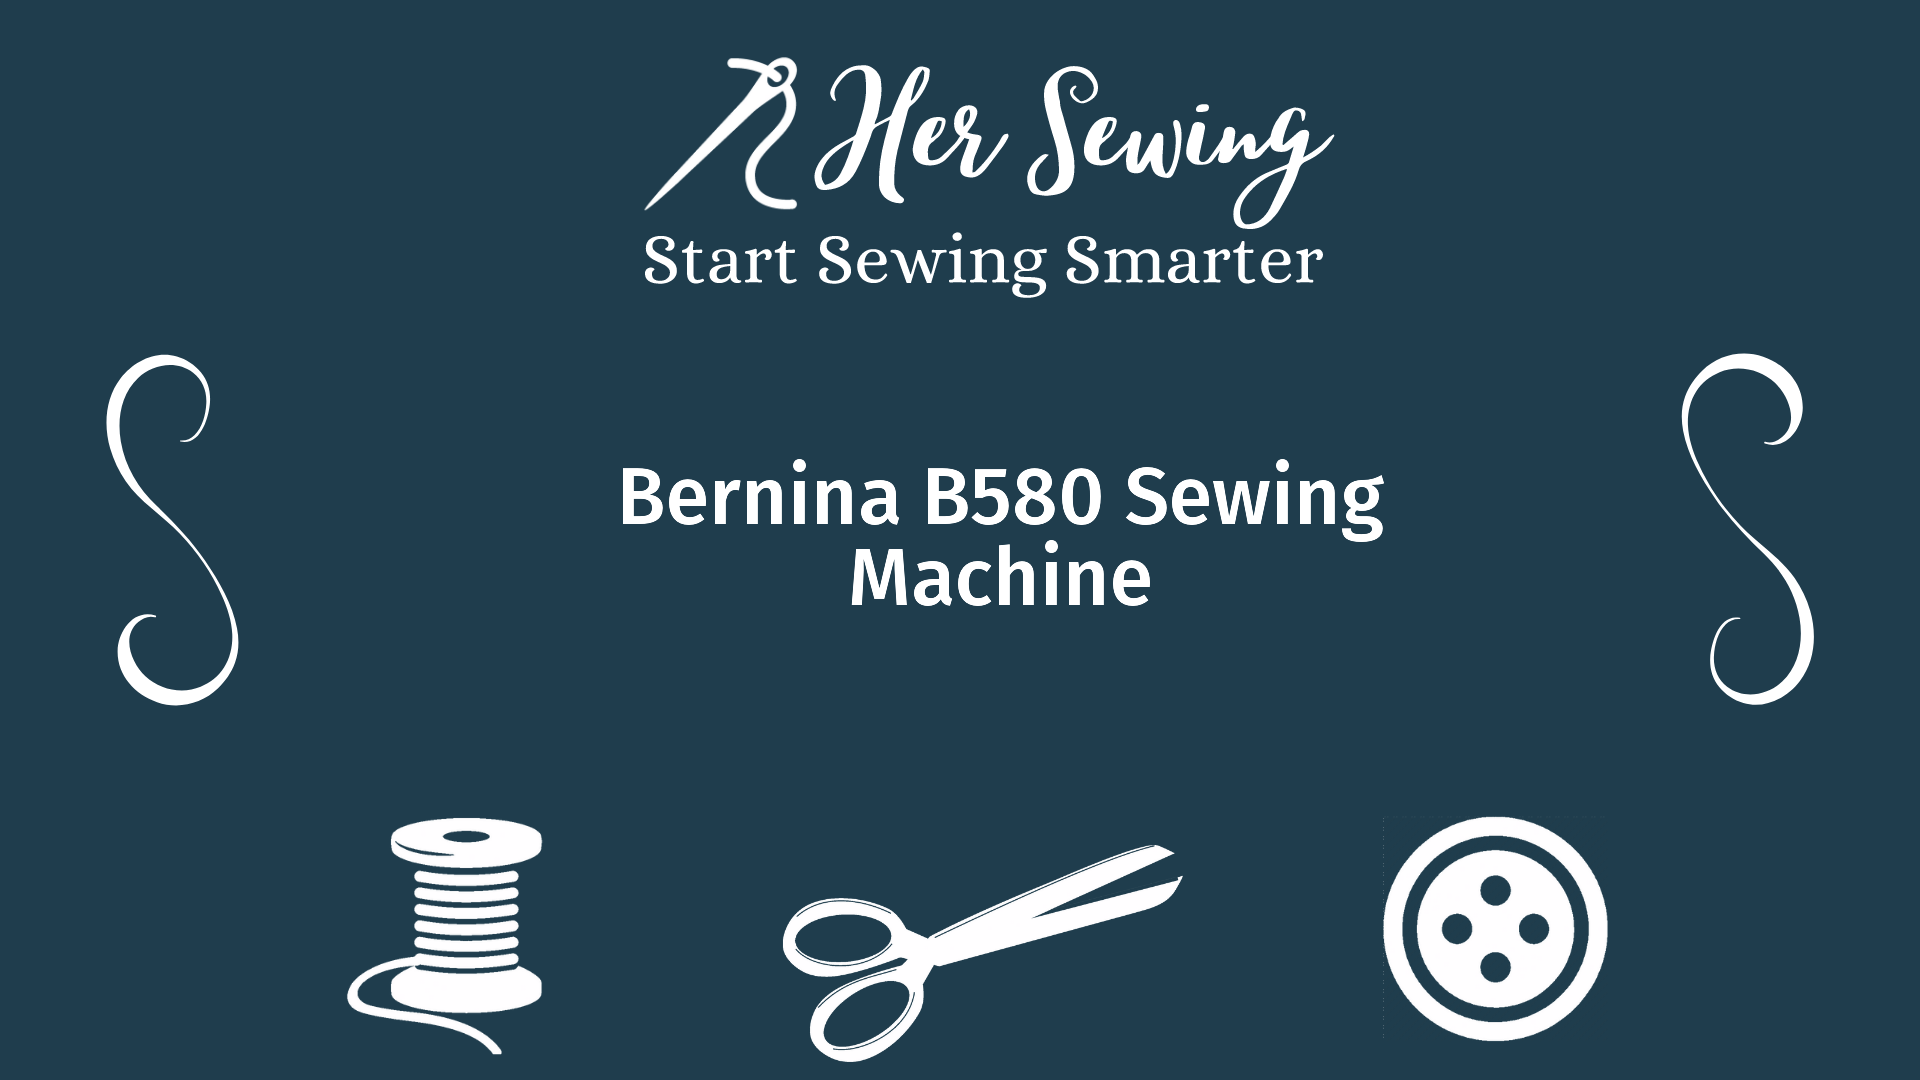 Bernina B580 Sewing Machine